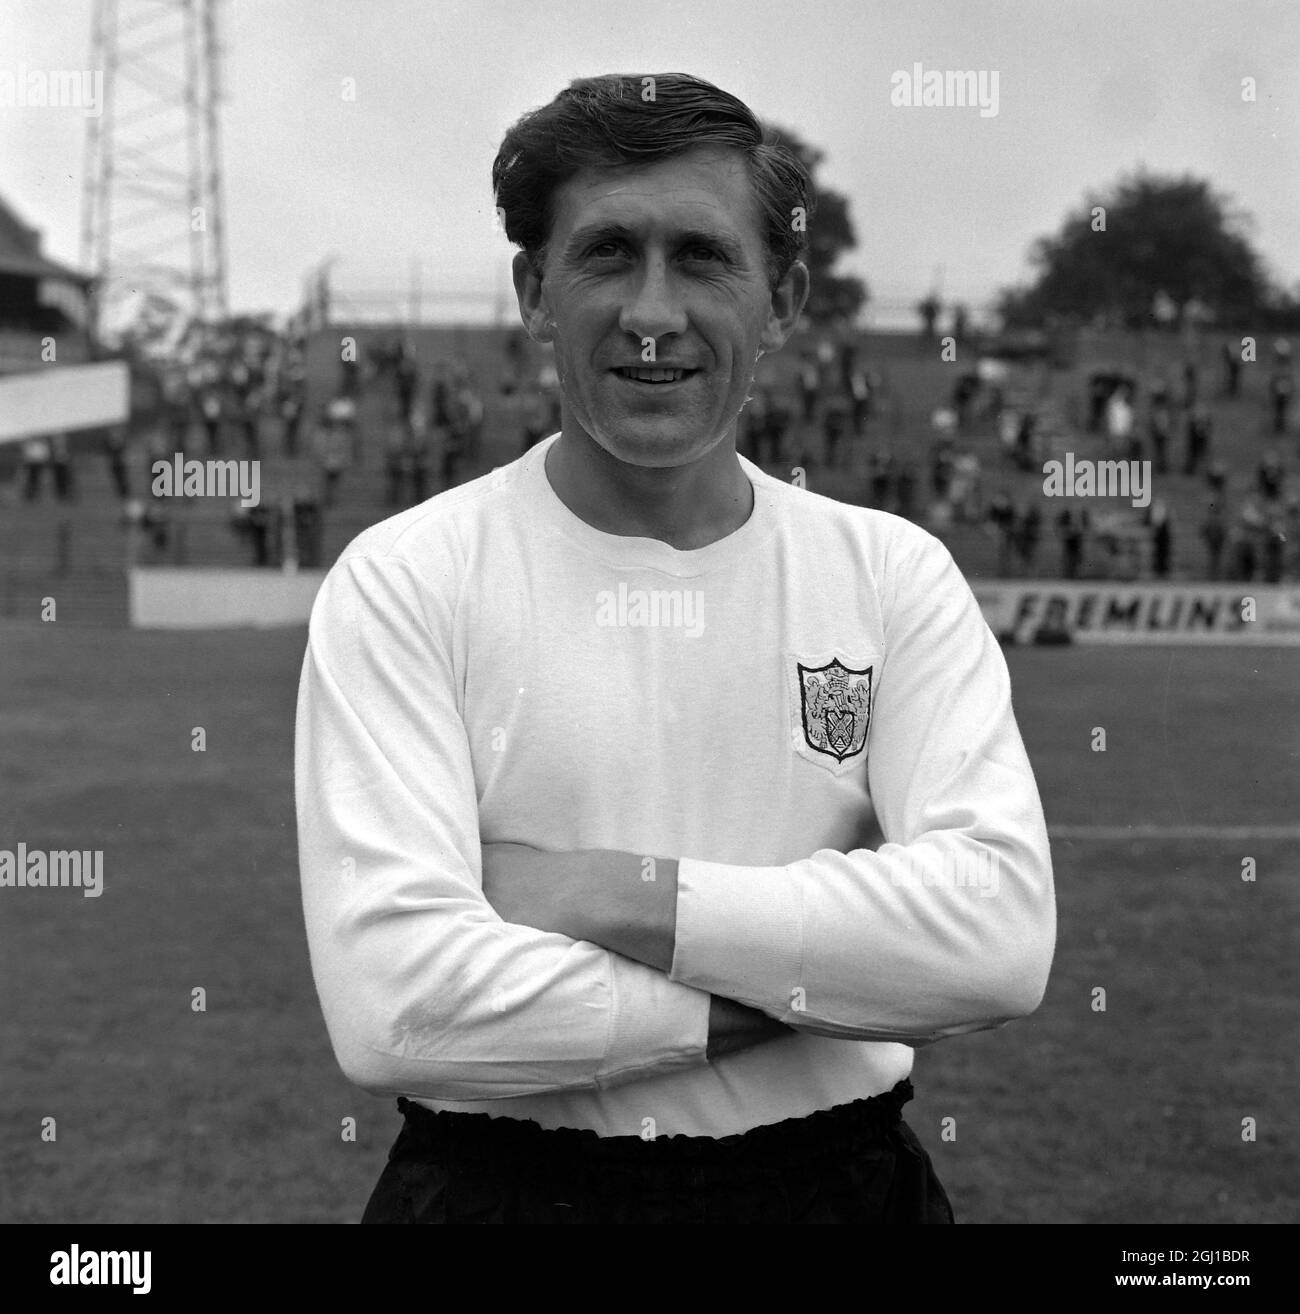 ROBERT HOWFIELD - PORTRAIT OF FOOTBALLER OF FULHAM FC FOOTBALL CLUB TEAM IN LONDON - ; 17 AUGUST 1964 Stock Photo